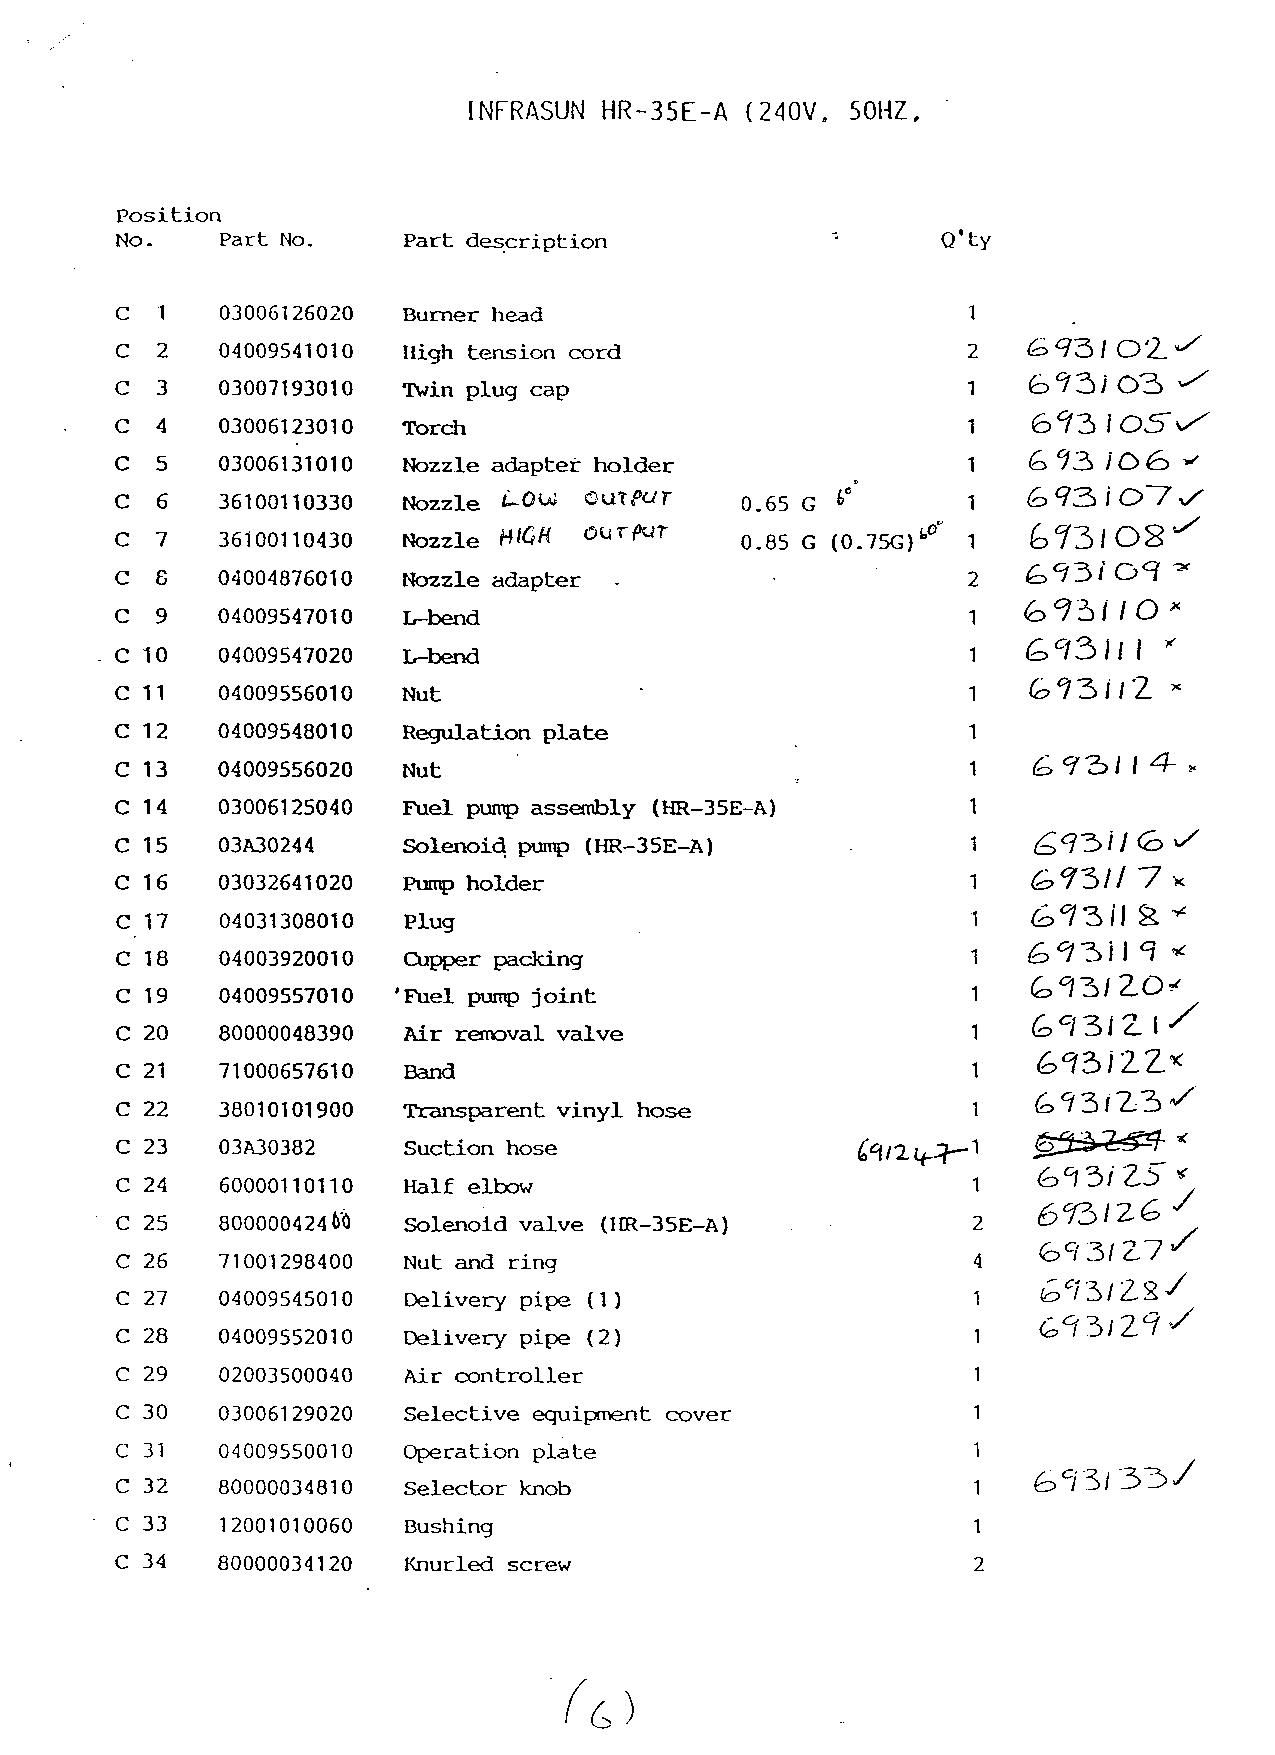 Orion Infrasun HR-35E-A Parts Diagram (exploded View) Parts List